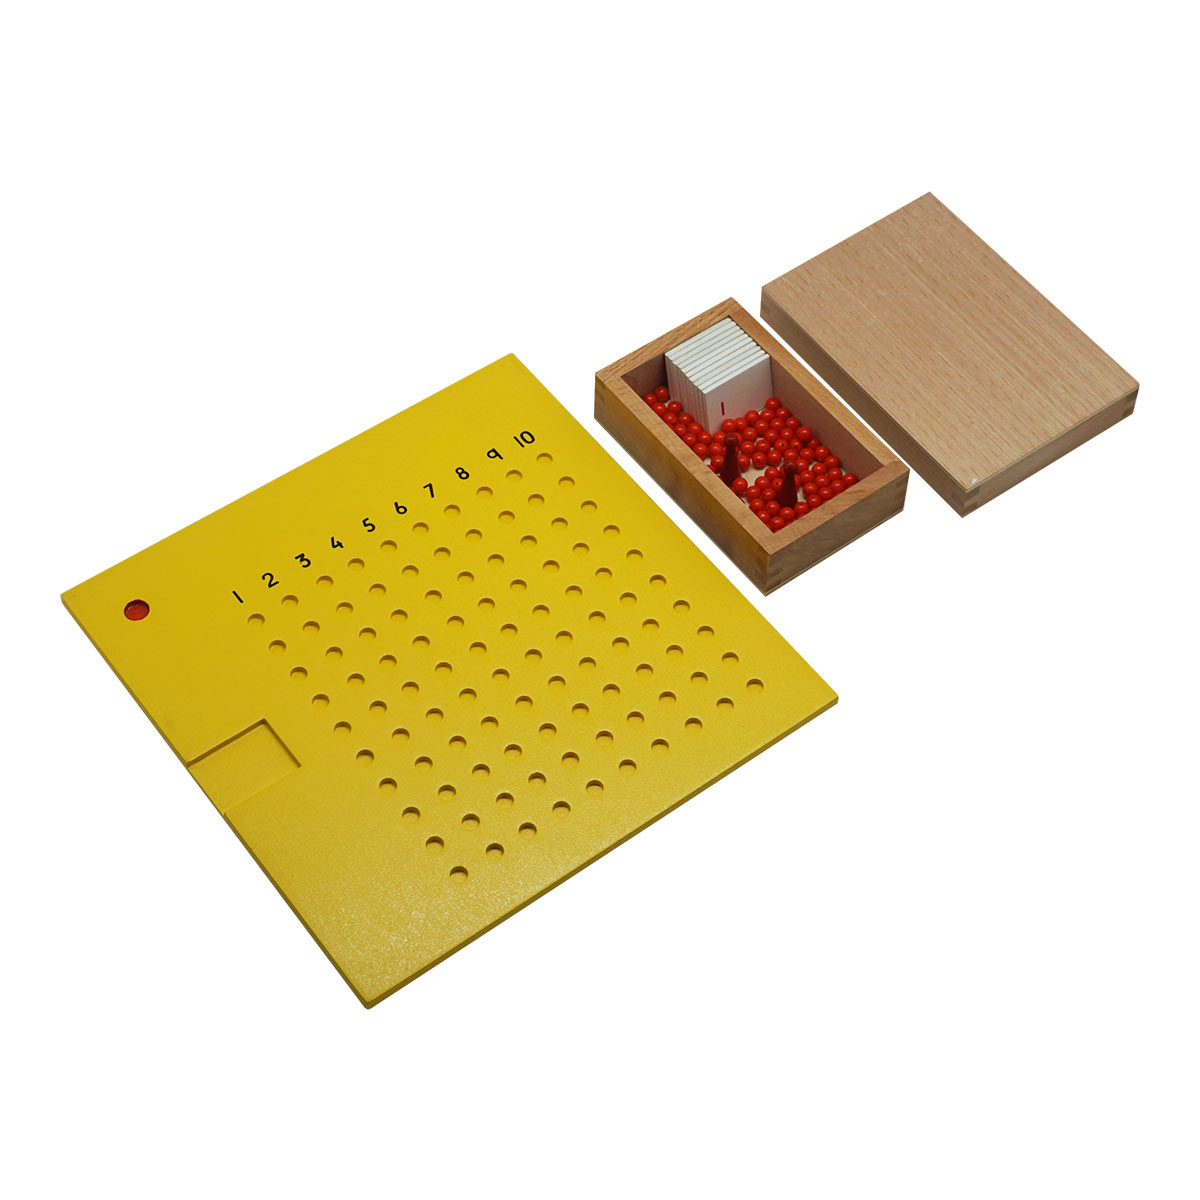 multiplication-board-inc-bead-box-montessori-materials-learning-toys